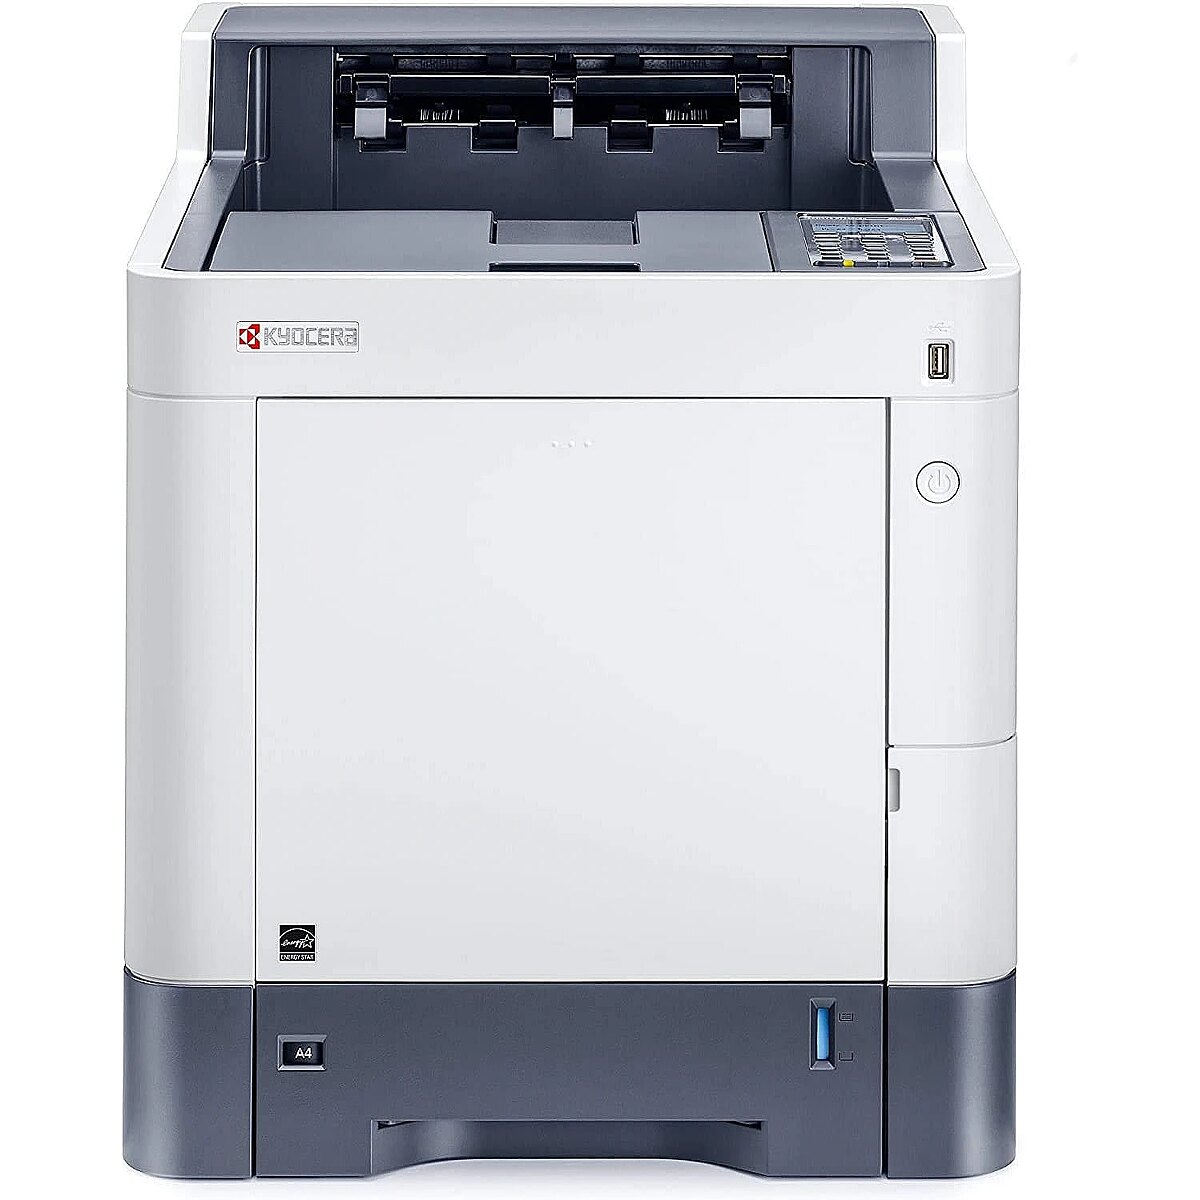 printer-laser-colour-a4-p6235cdn-1102tw3nl1-kyocera.jpeg